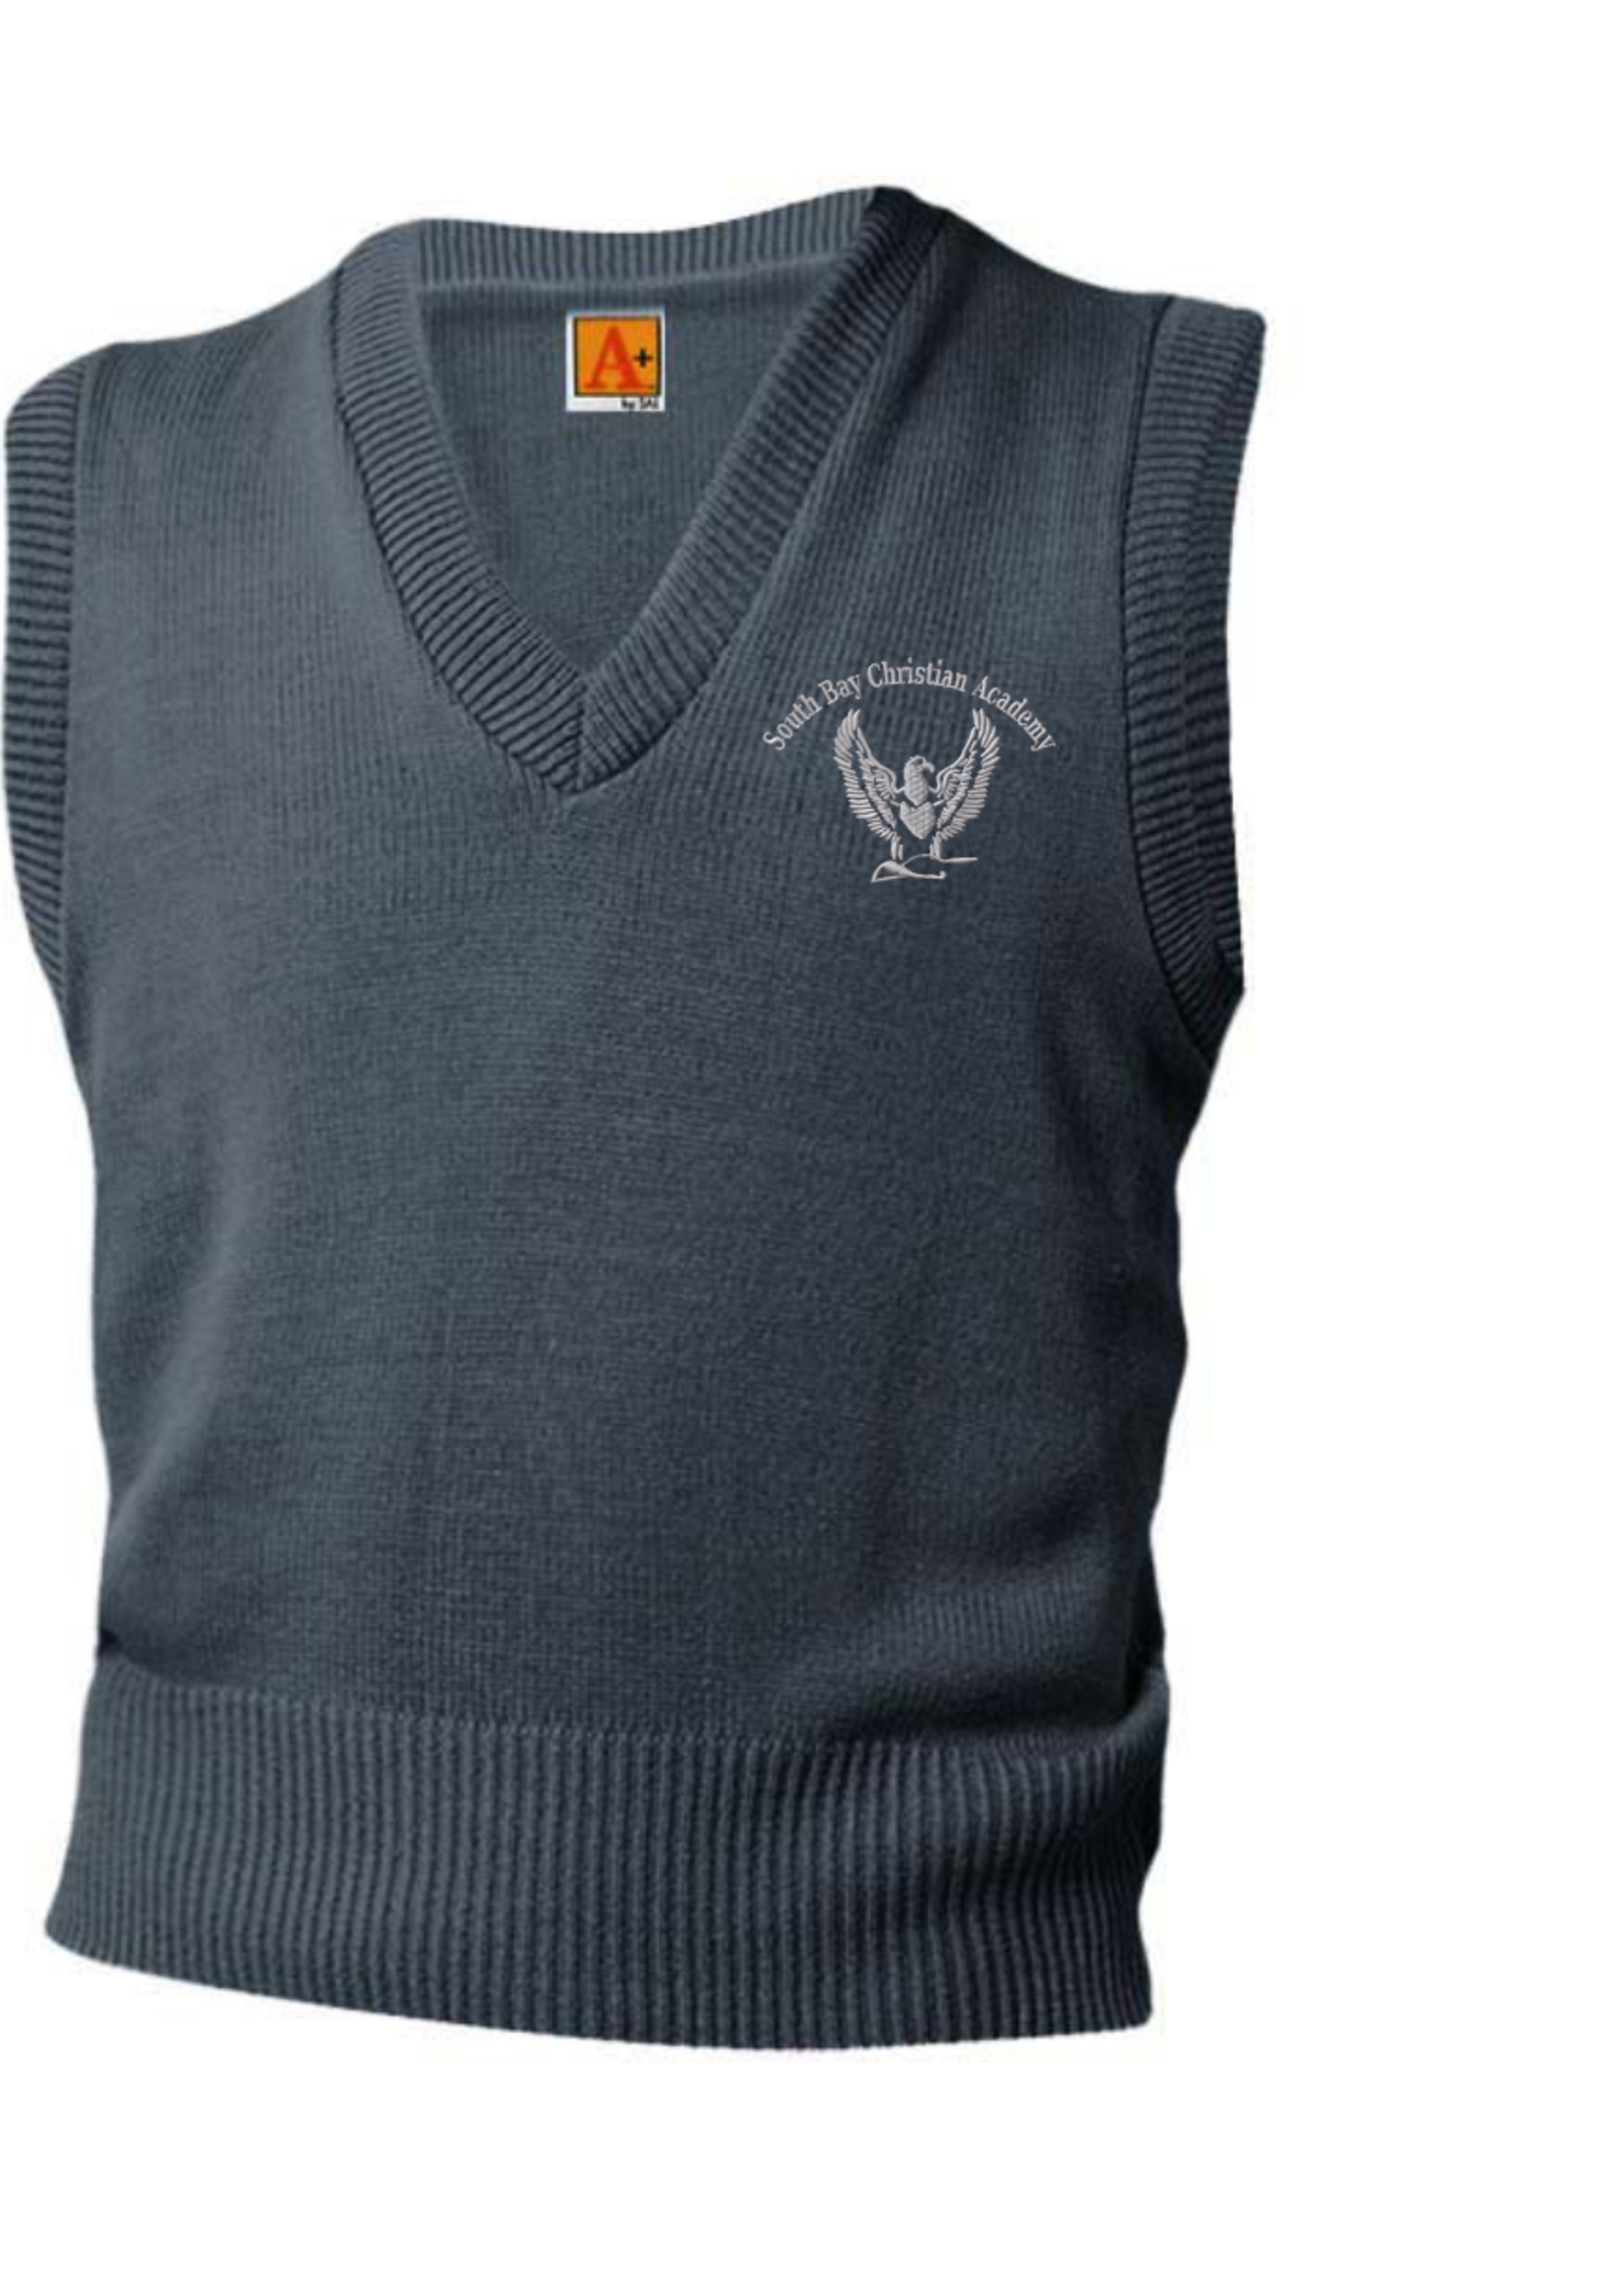 SBCA V-neck sweater vest